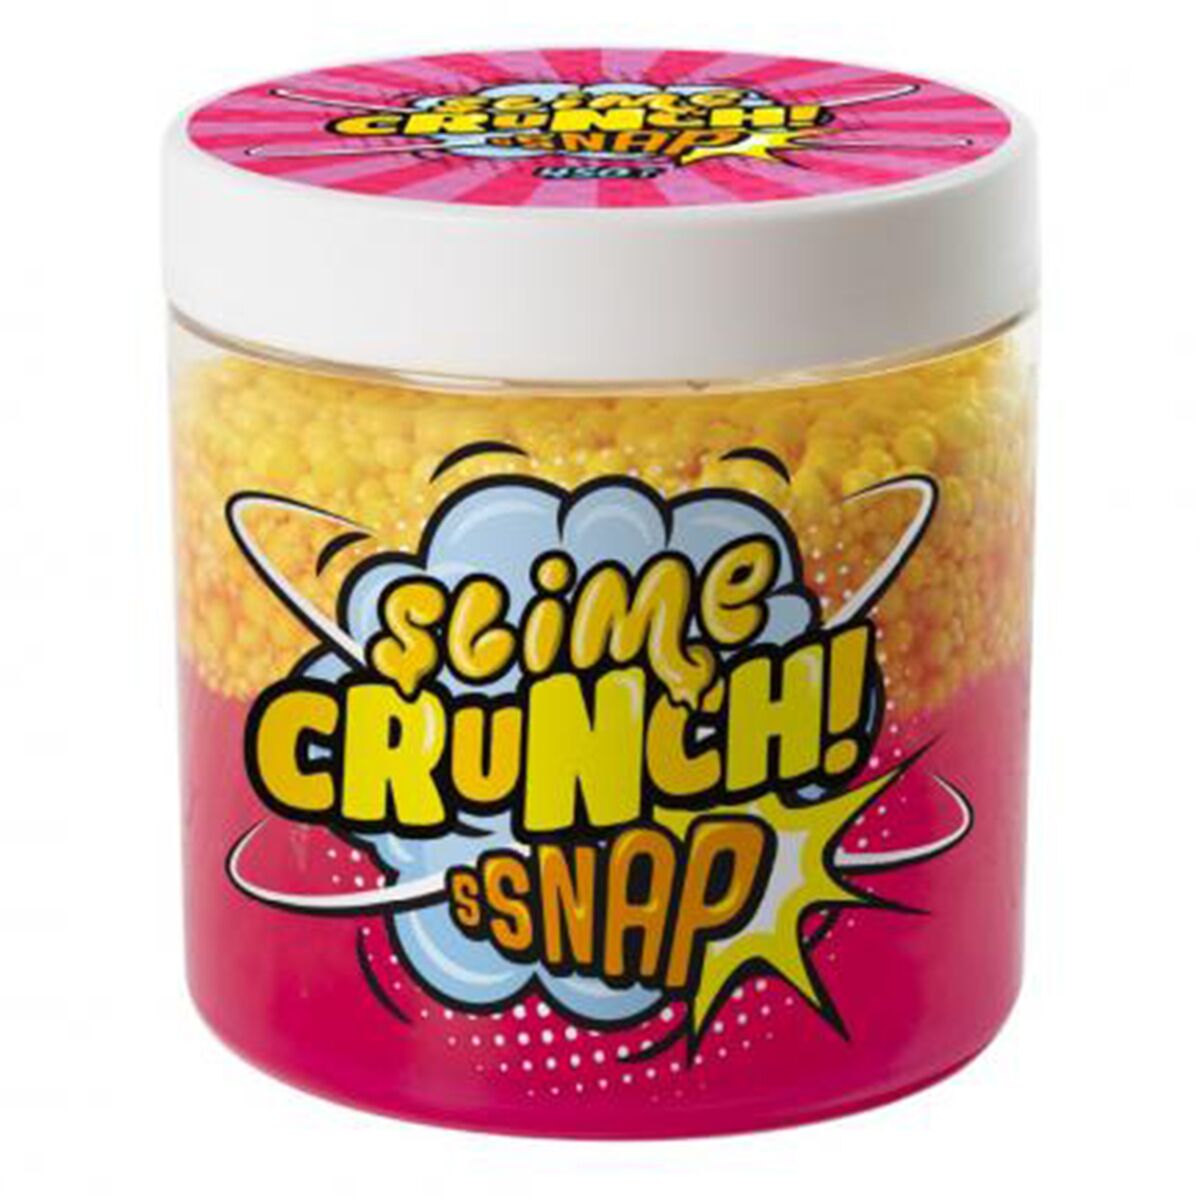 Slime-Crunch S130-42  Ssnap с ароматом клубники 450г